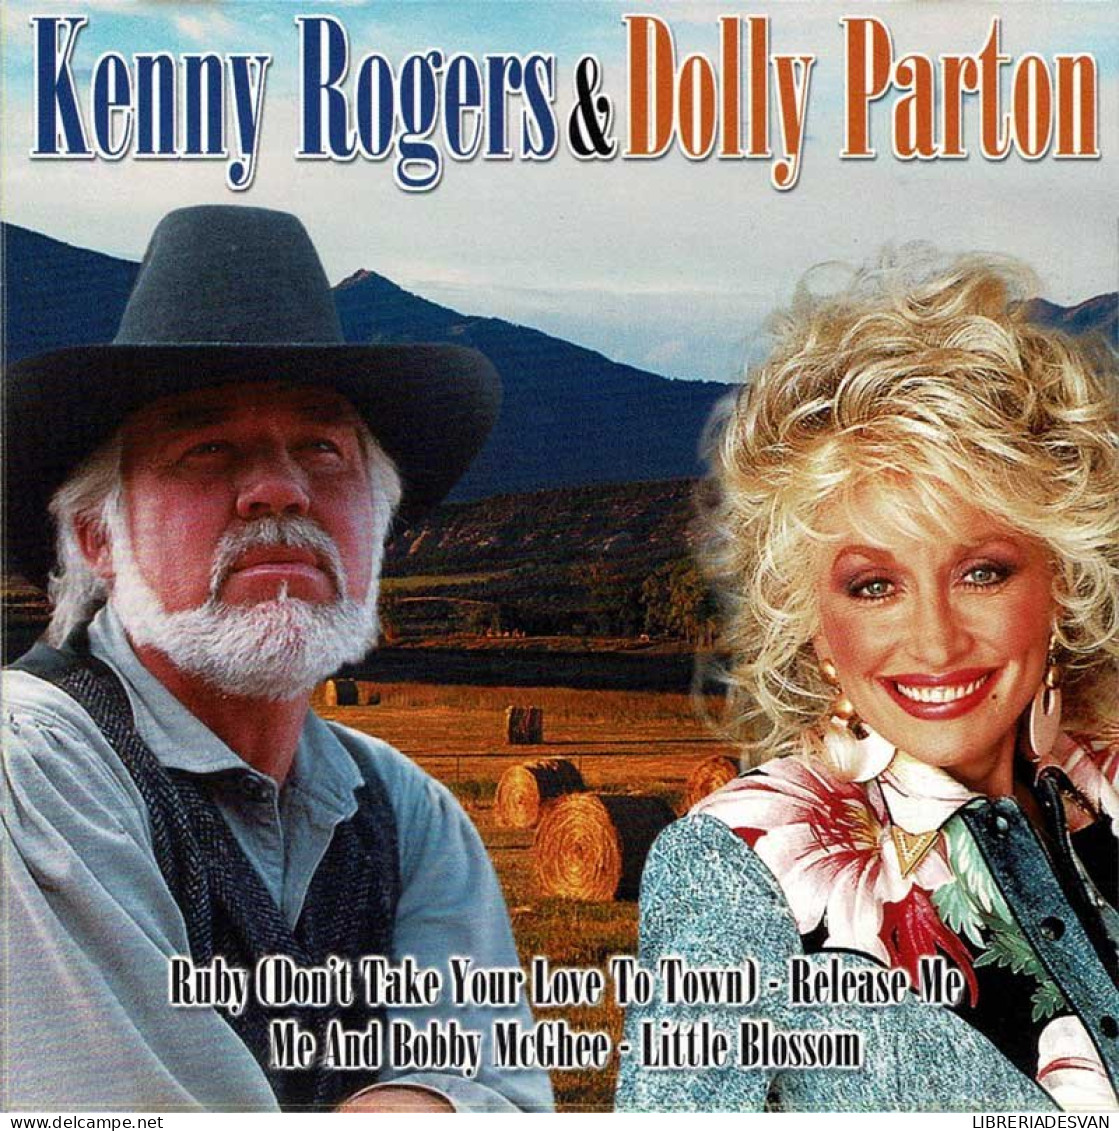 Kenny Rogers & Dolly Parton - Kenny Rogers & Dolly Parton. CD - Country & Folk